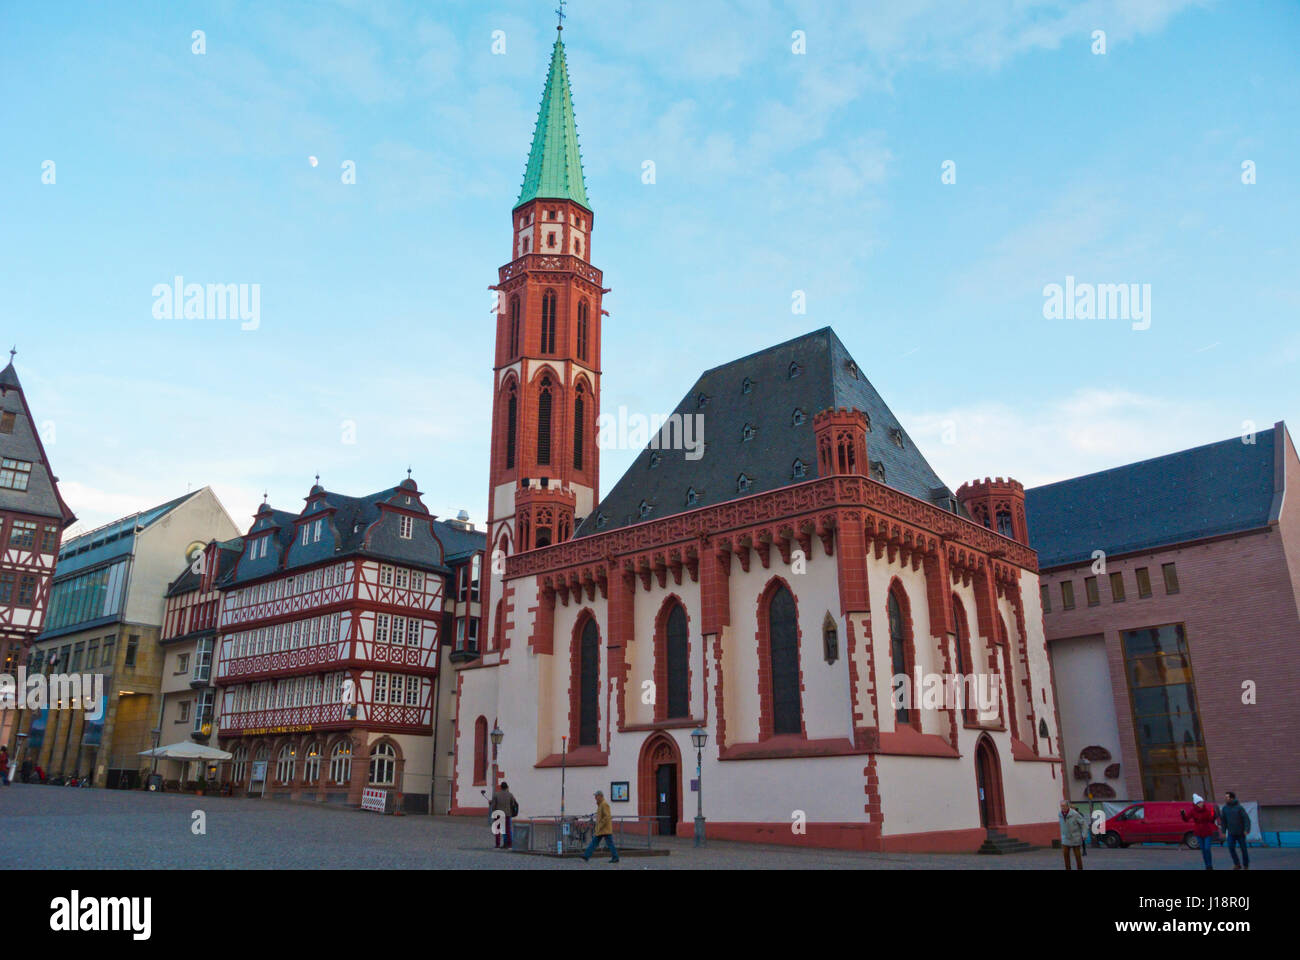 Alte Nikolaikirche, Römerberg, Altstadt, old town, Frankfurt am Main, Hesse, Germany Stock Photo